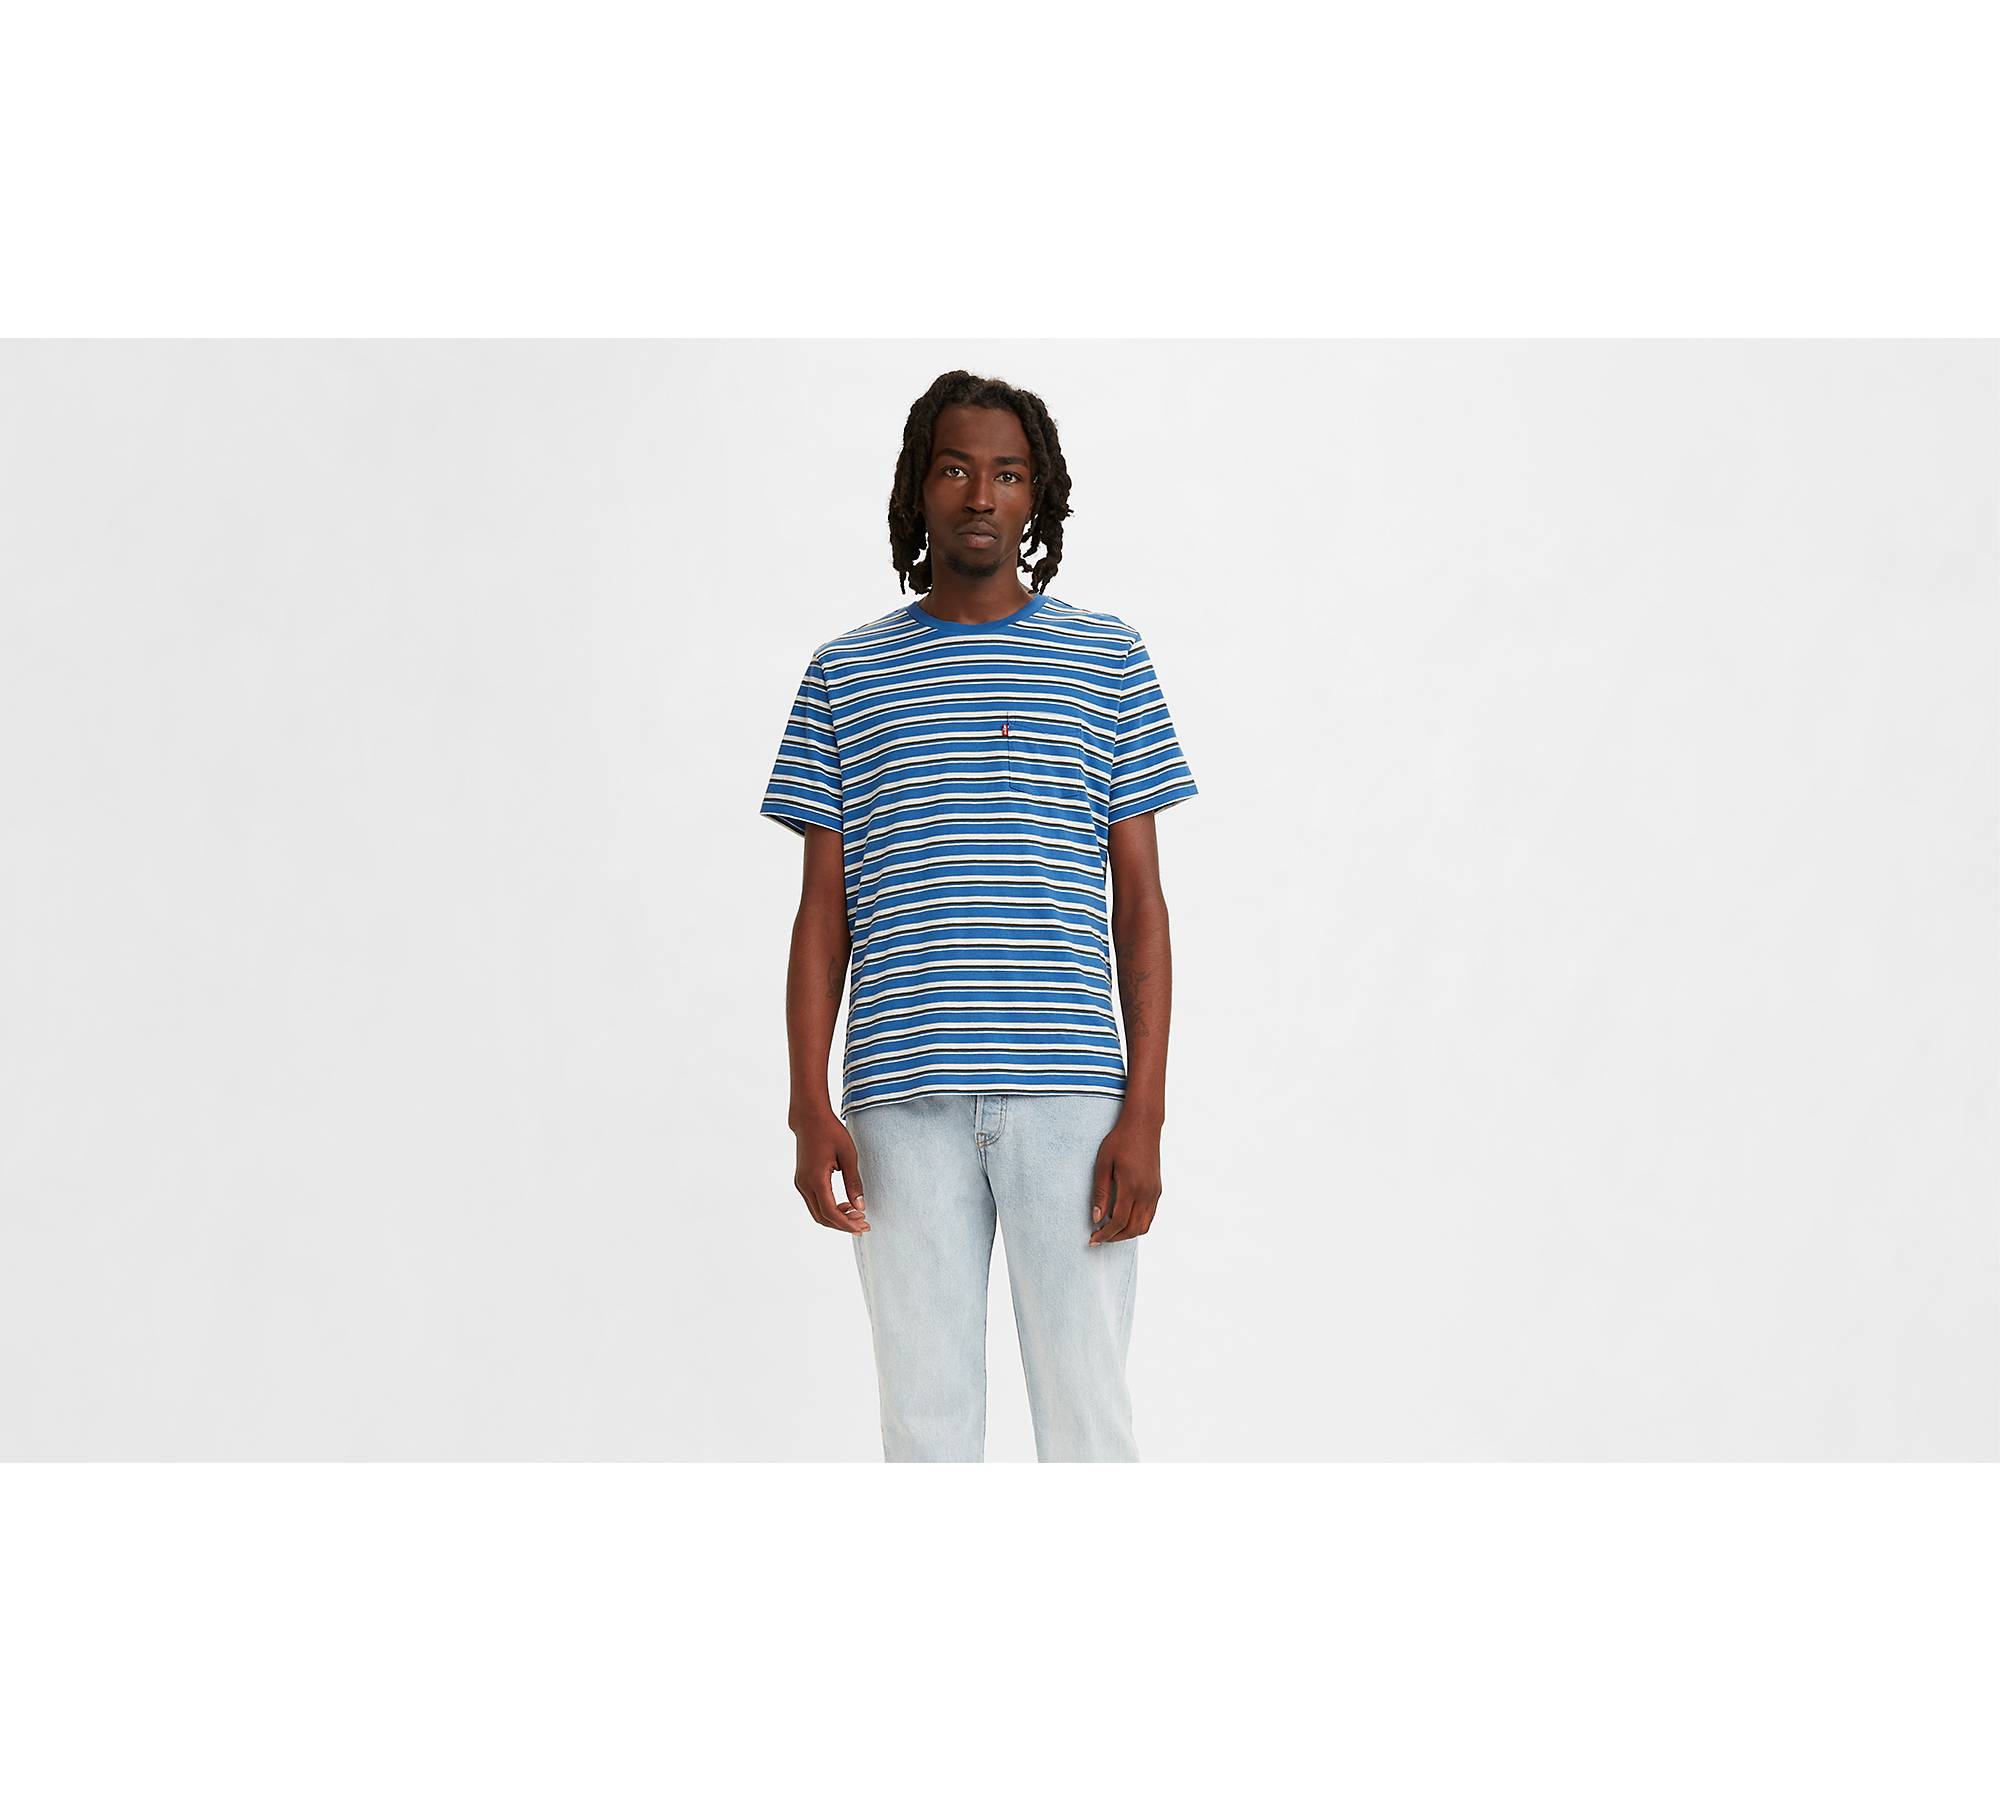 Levi's Logo Classic T-Shirt Mens Multicolor Red White Blue Logo Size Medium